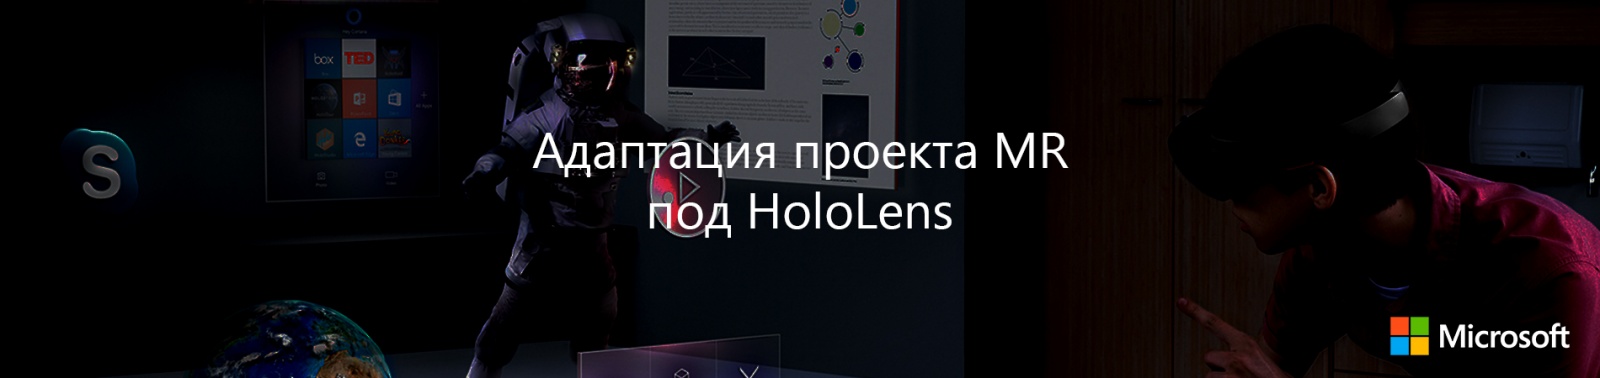 Адаптация проекта MR под HoloLens - 1